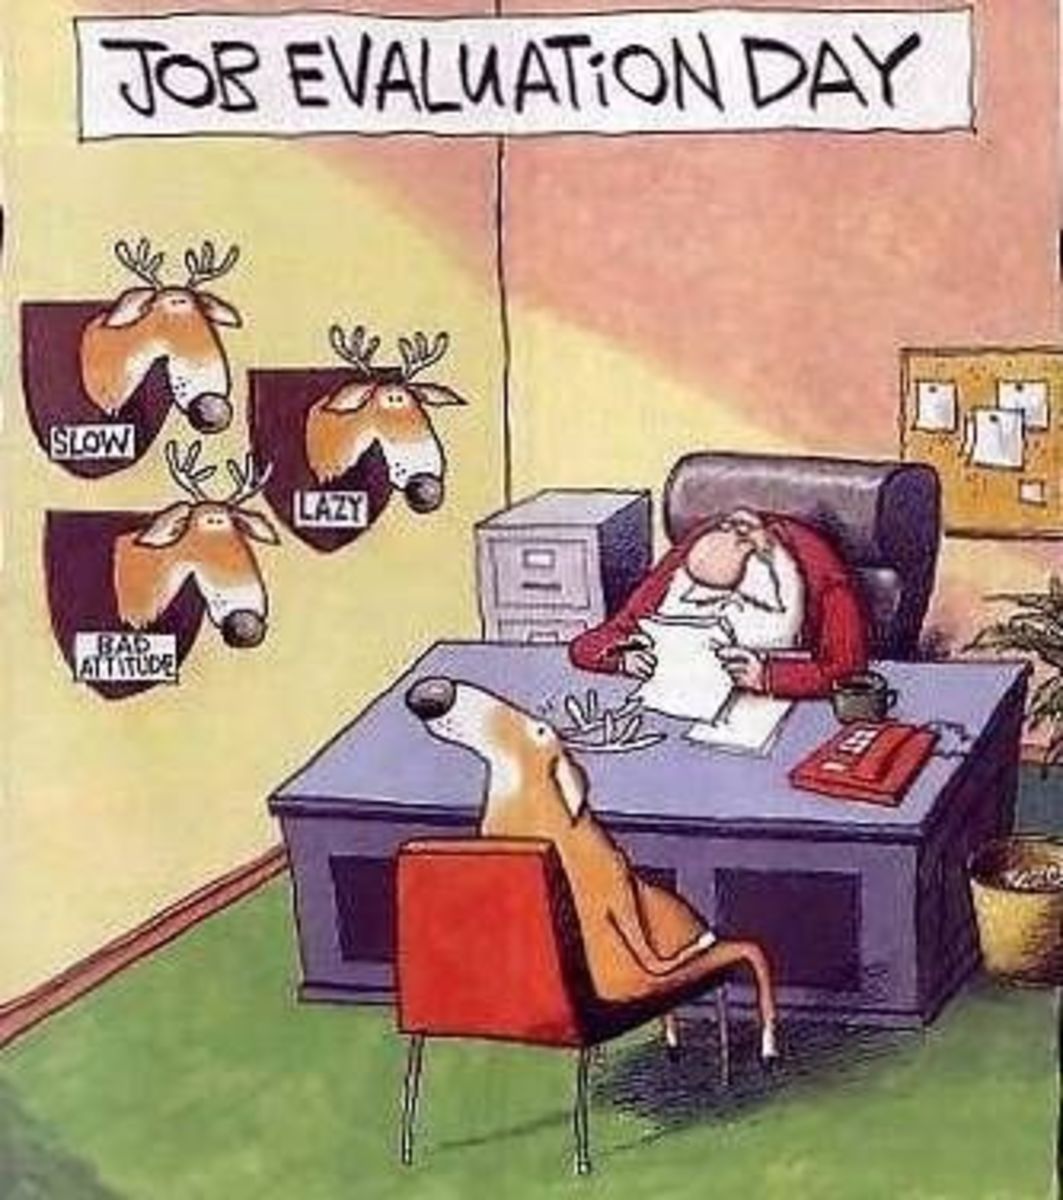 19 - Job Evaluation Day